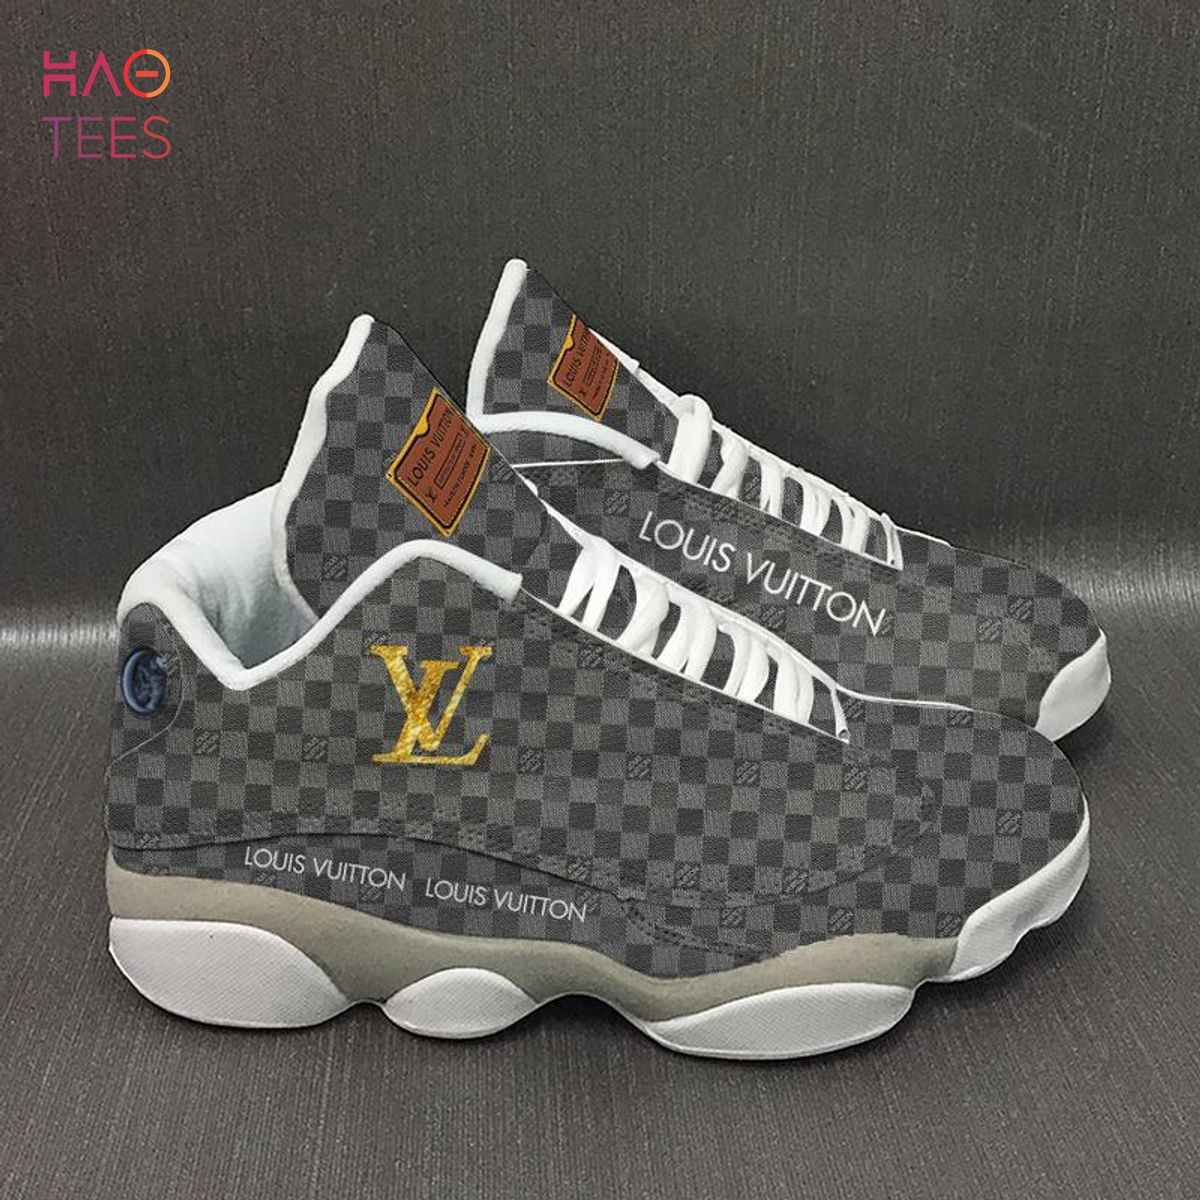 HOT] Air jordan 13 Mix Louis Vuitton Luxury Sneaker, Shoes